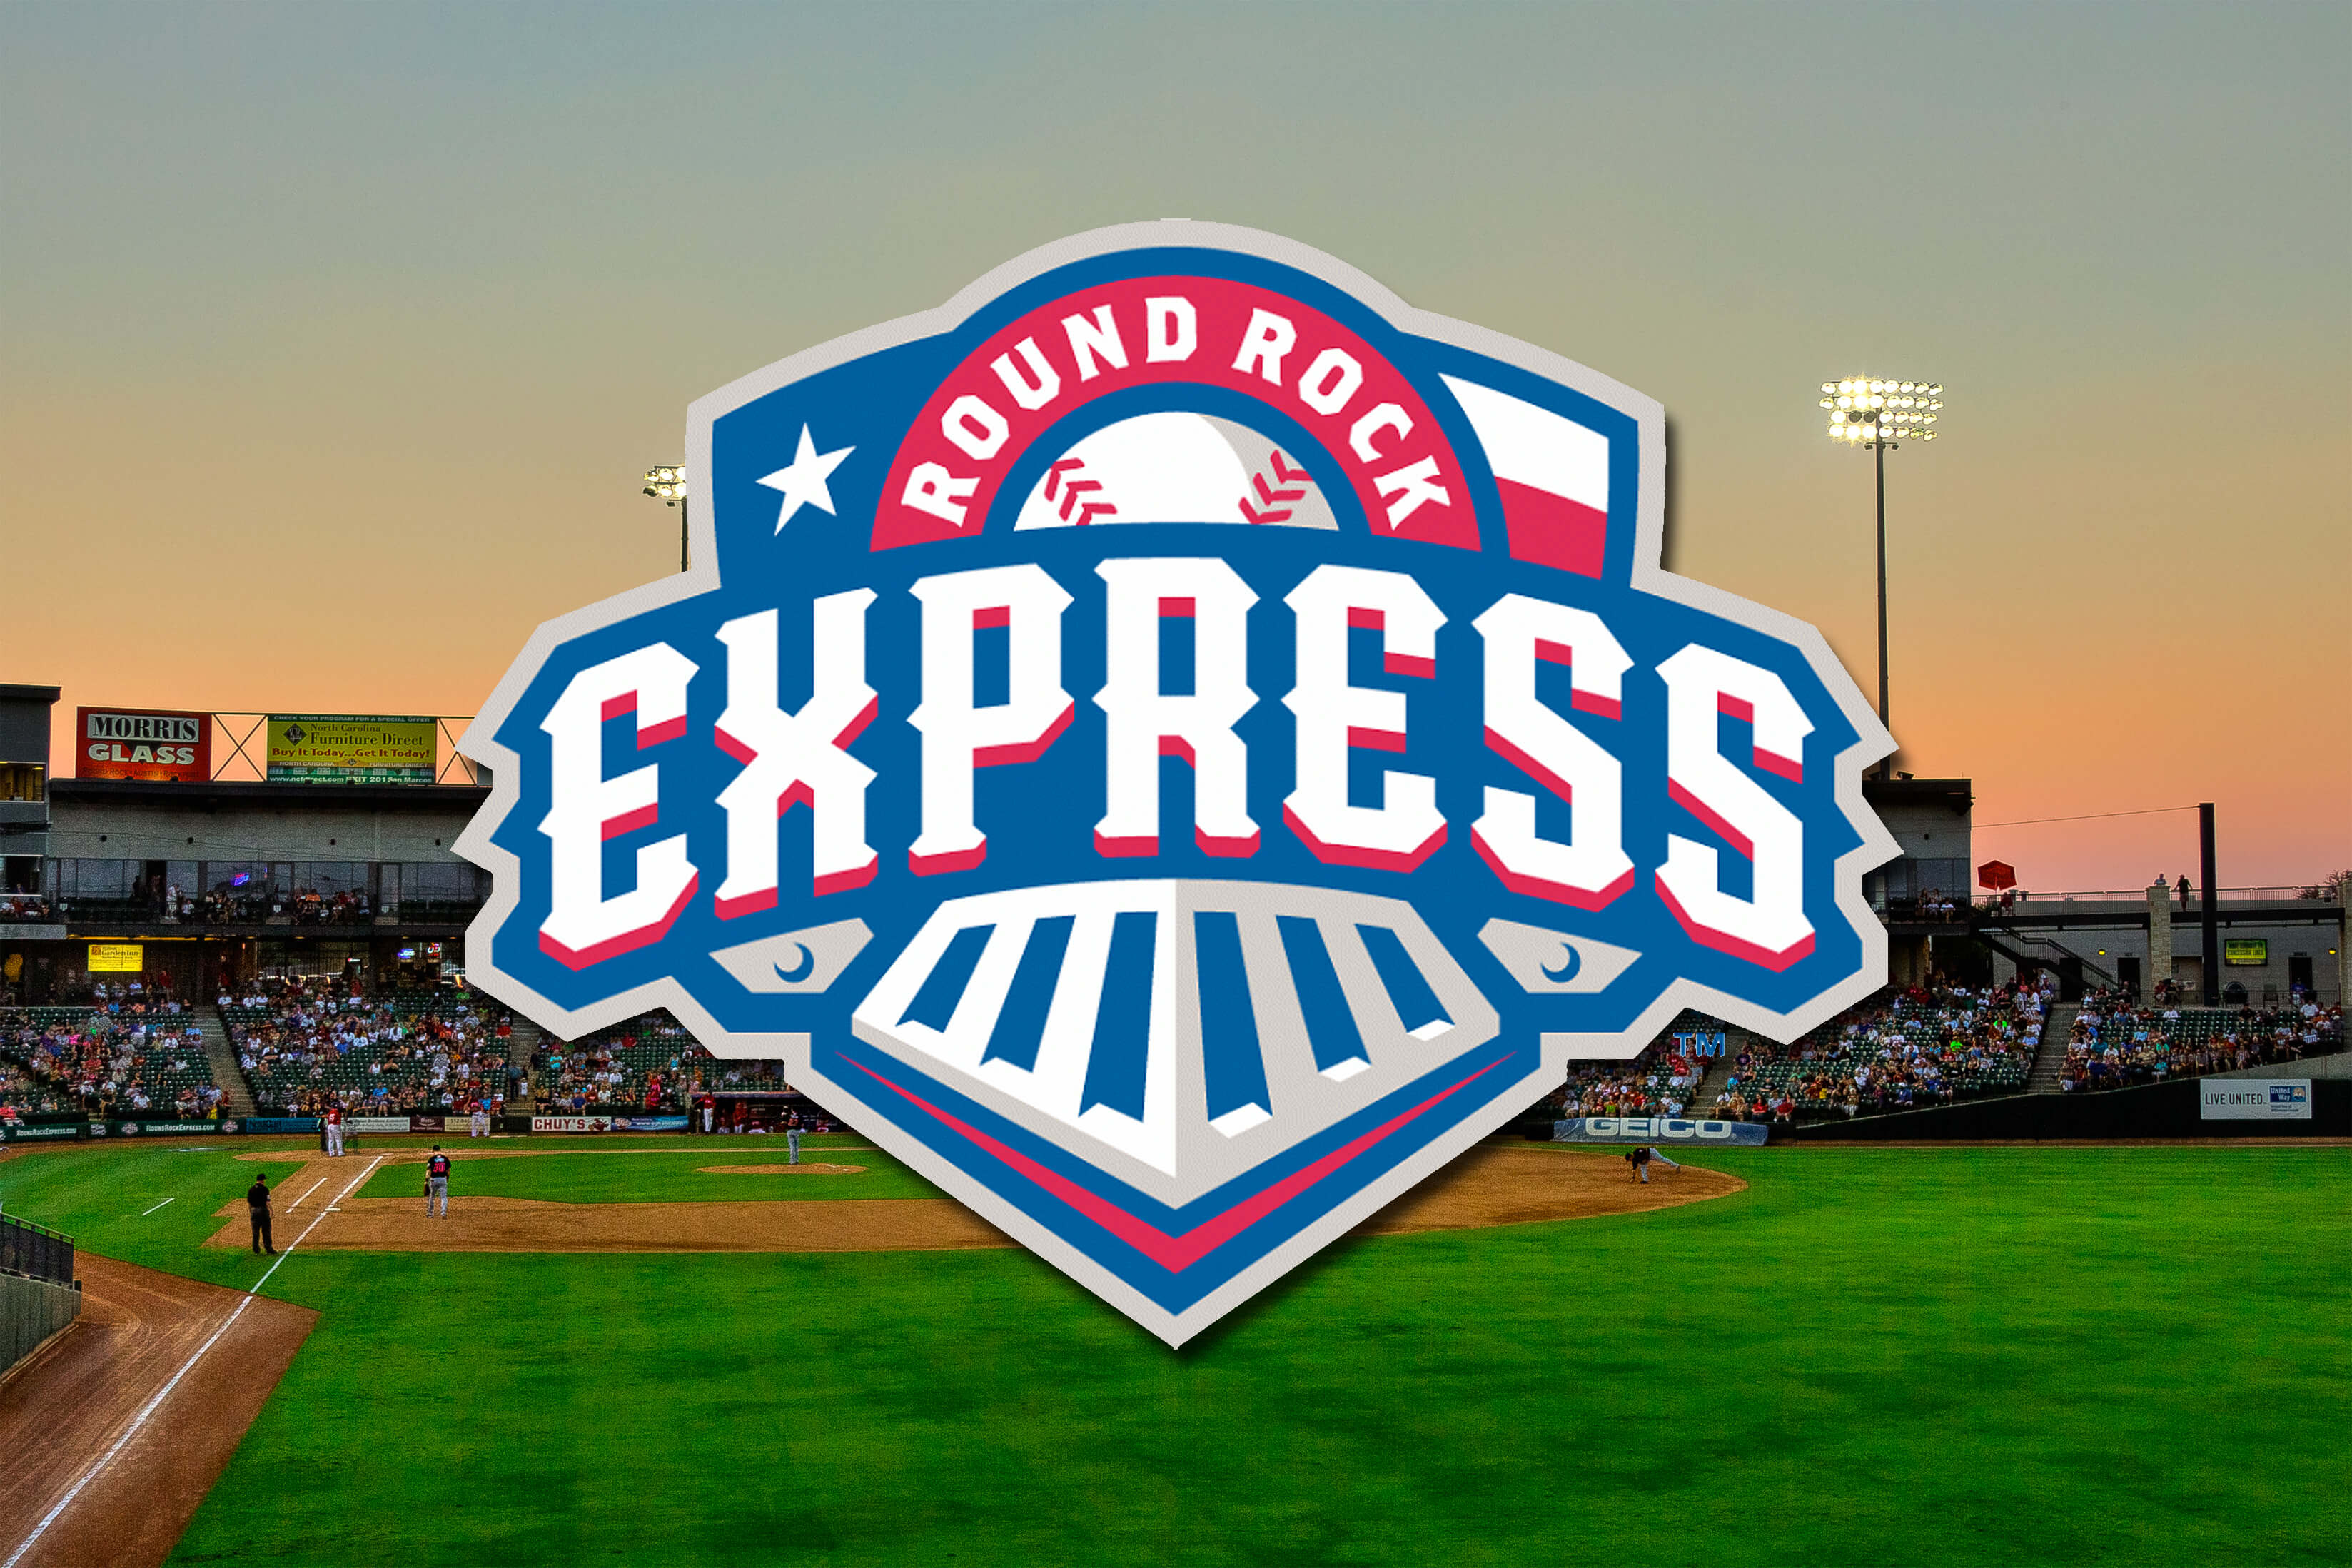 Round Rock Express open 17th season at Dell Diamond City of Round Rock